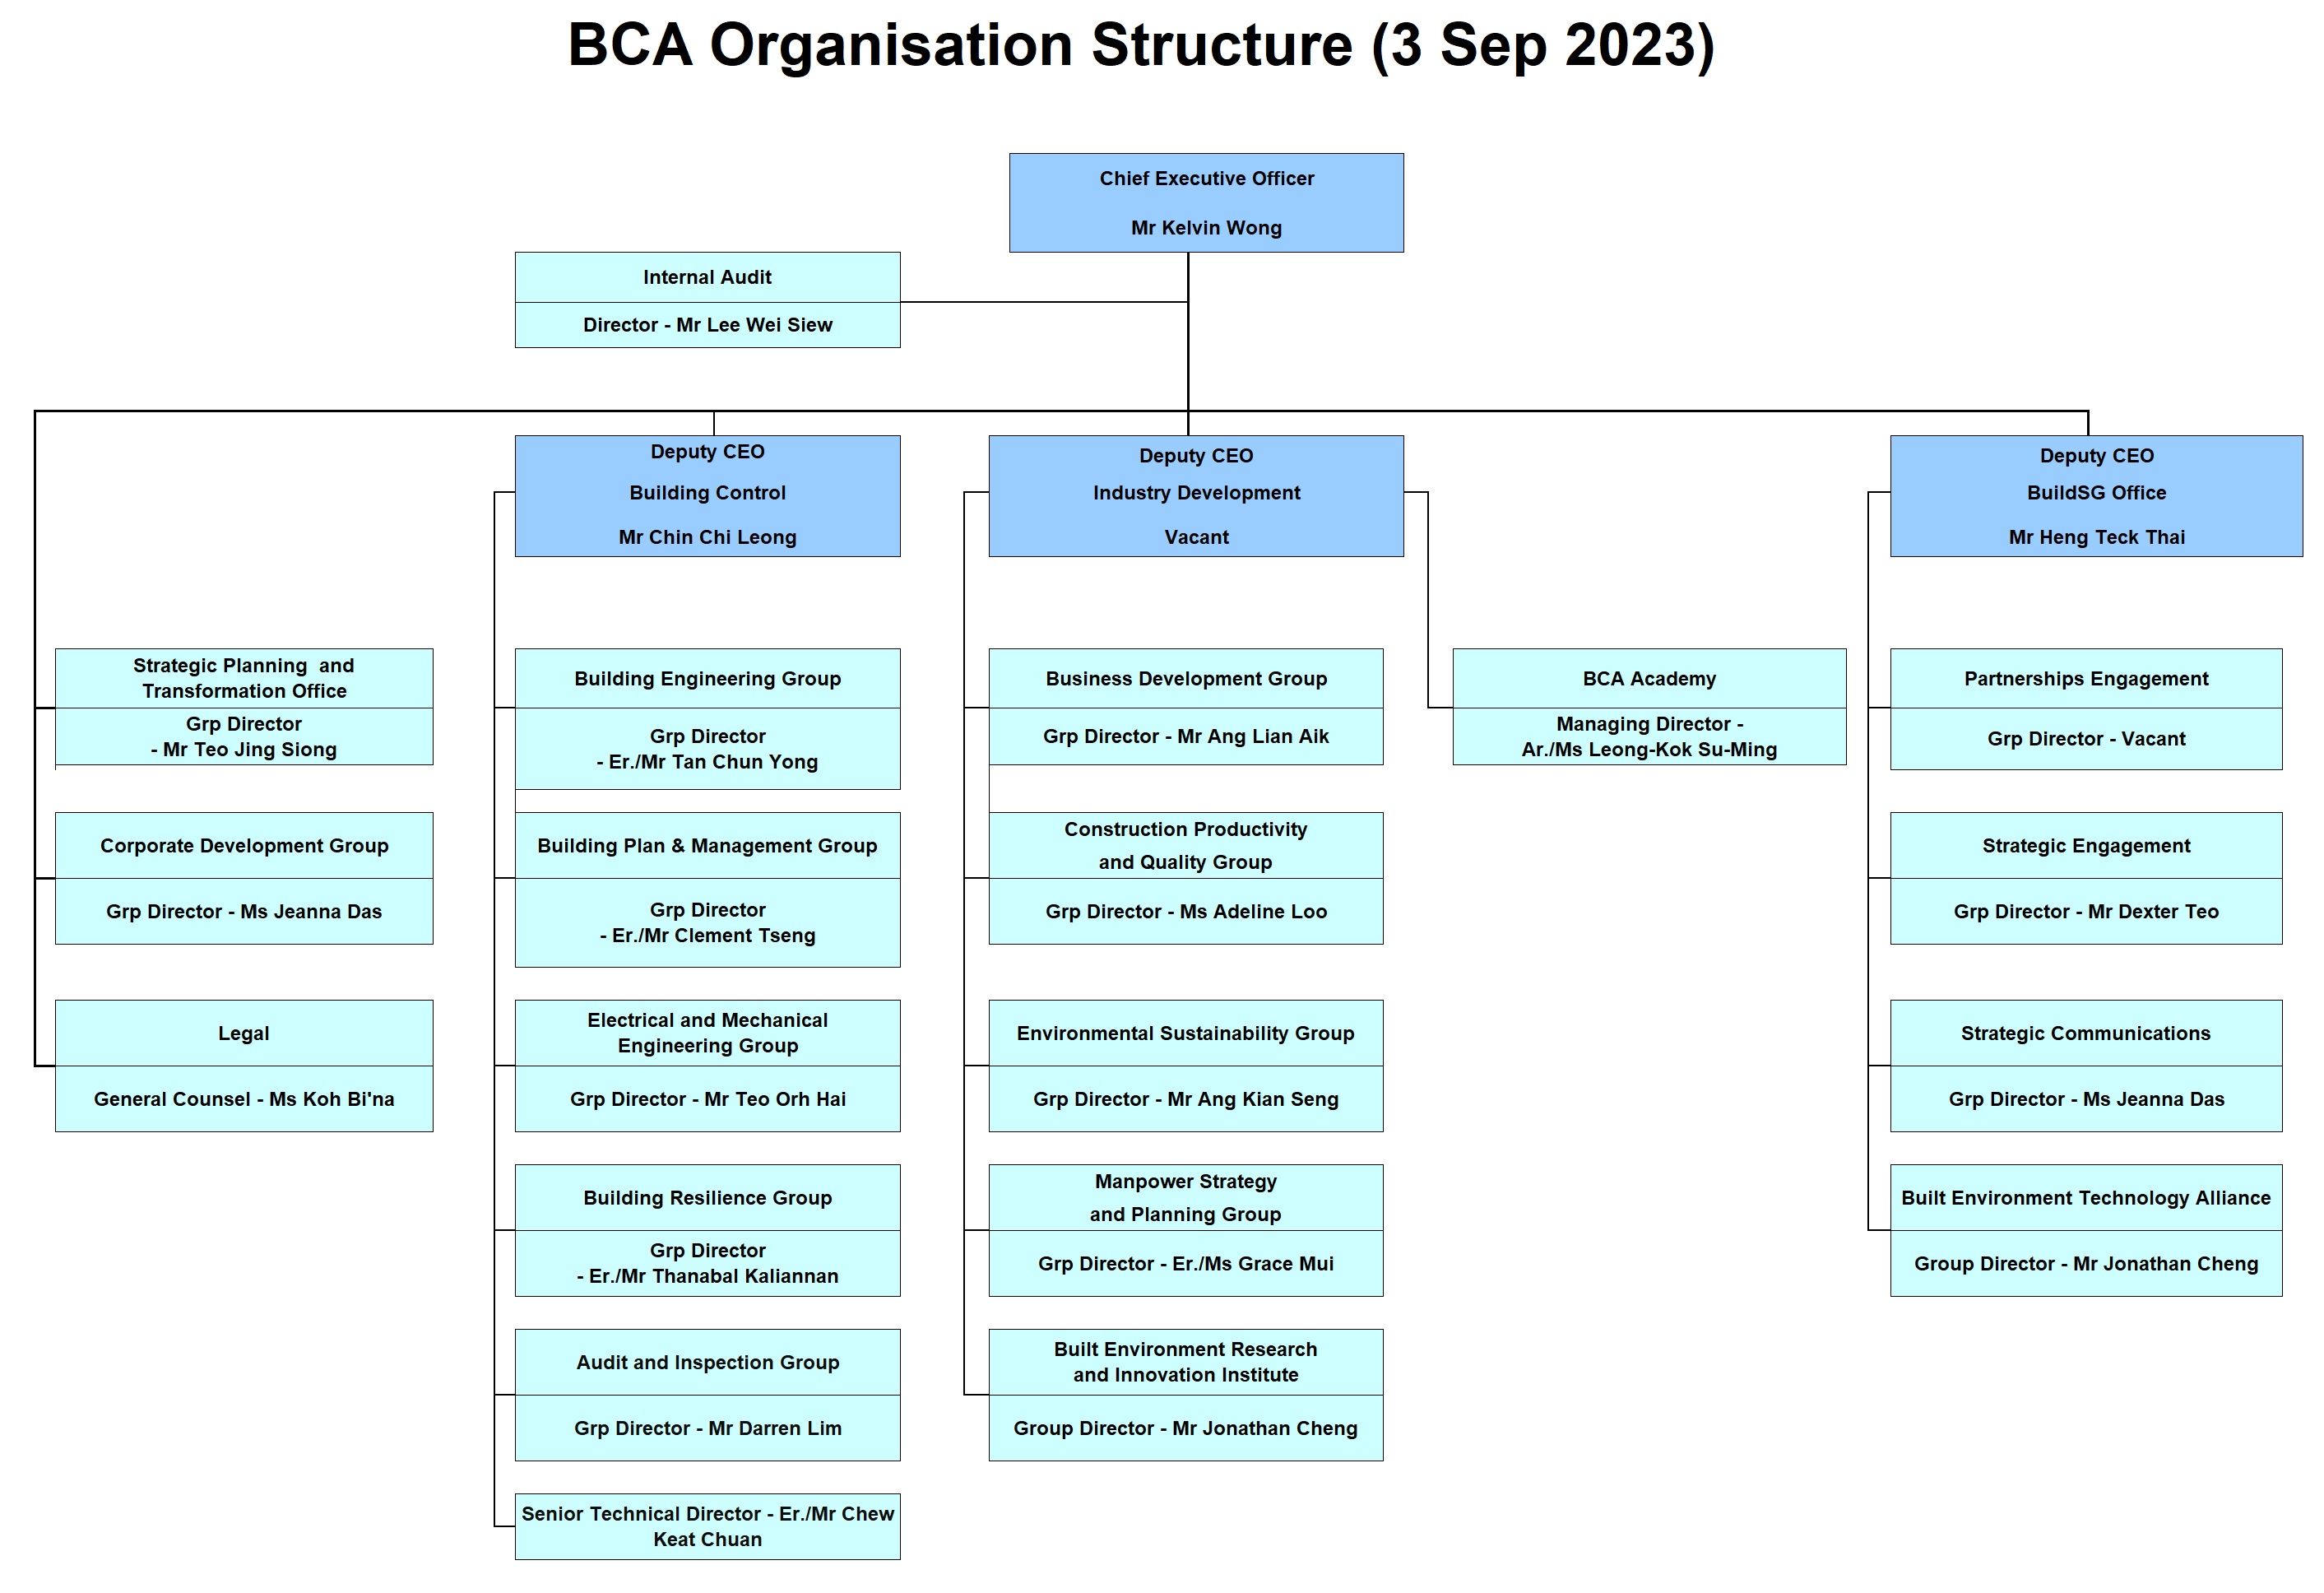 BCA Org Chart (3 Sep 23)_for internet